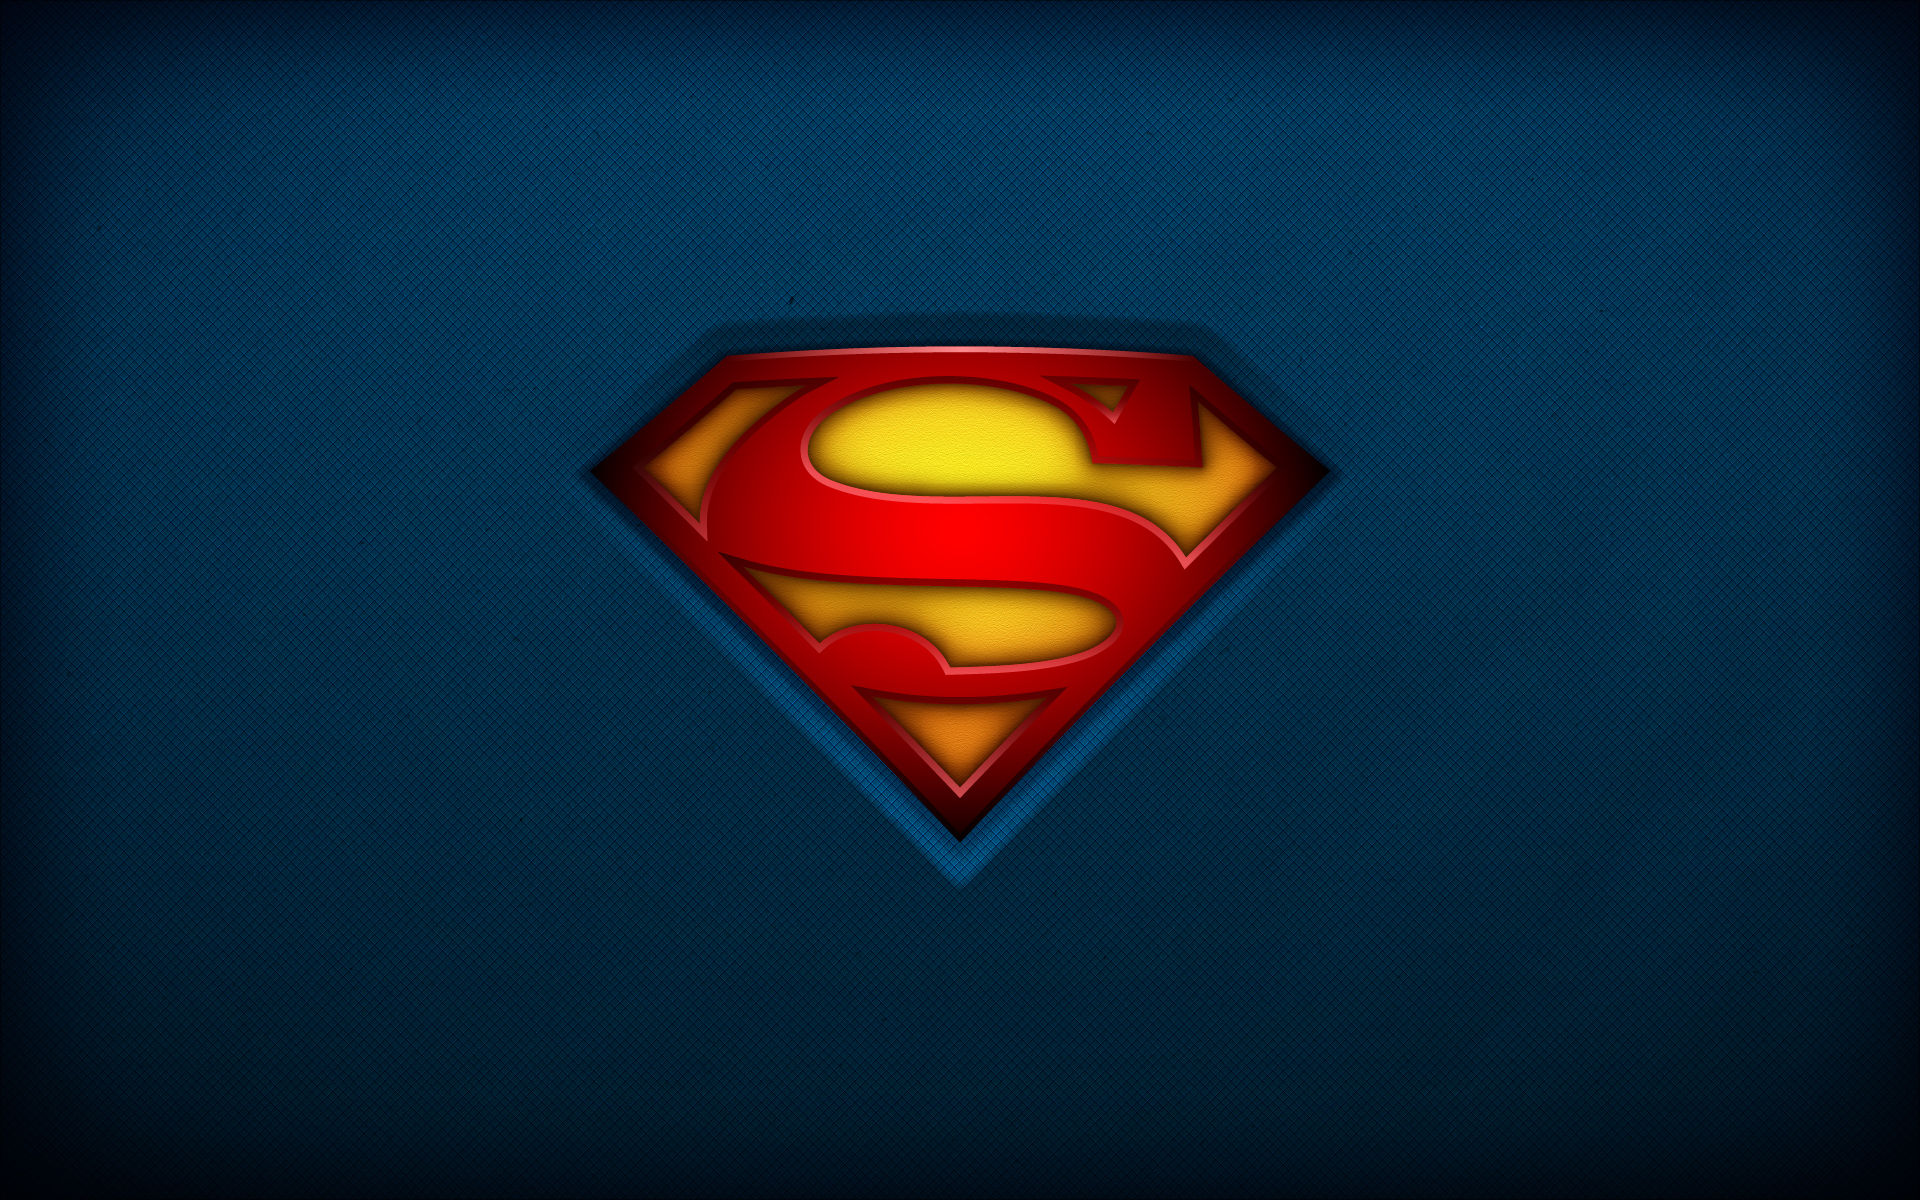 Superman Wallpaper Image On